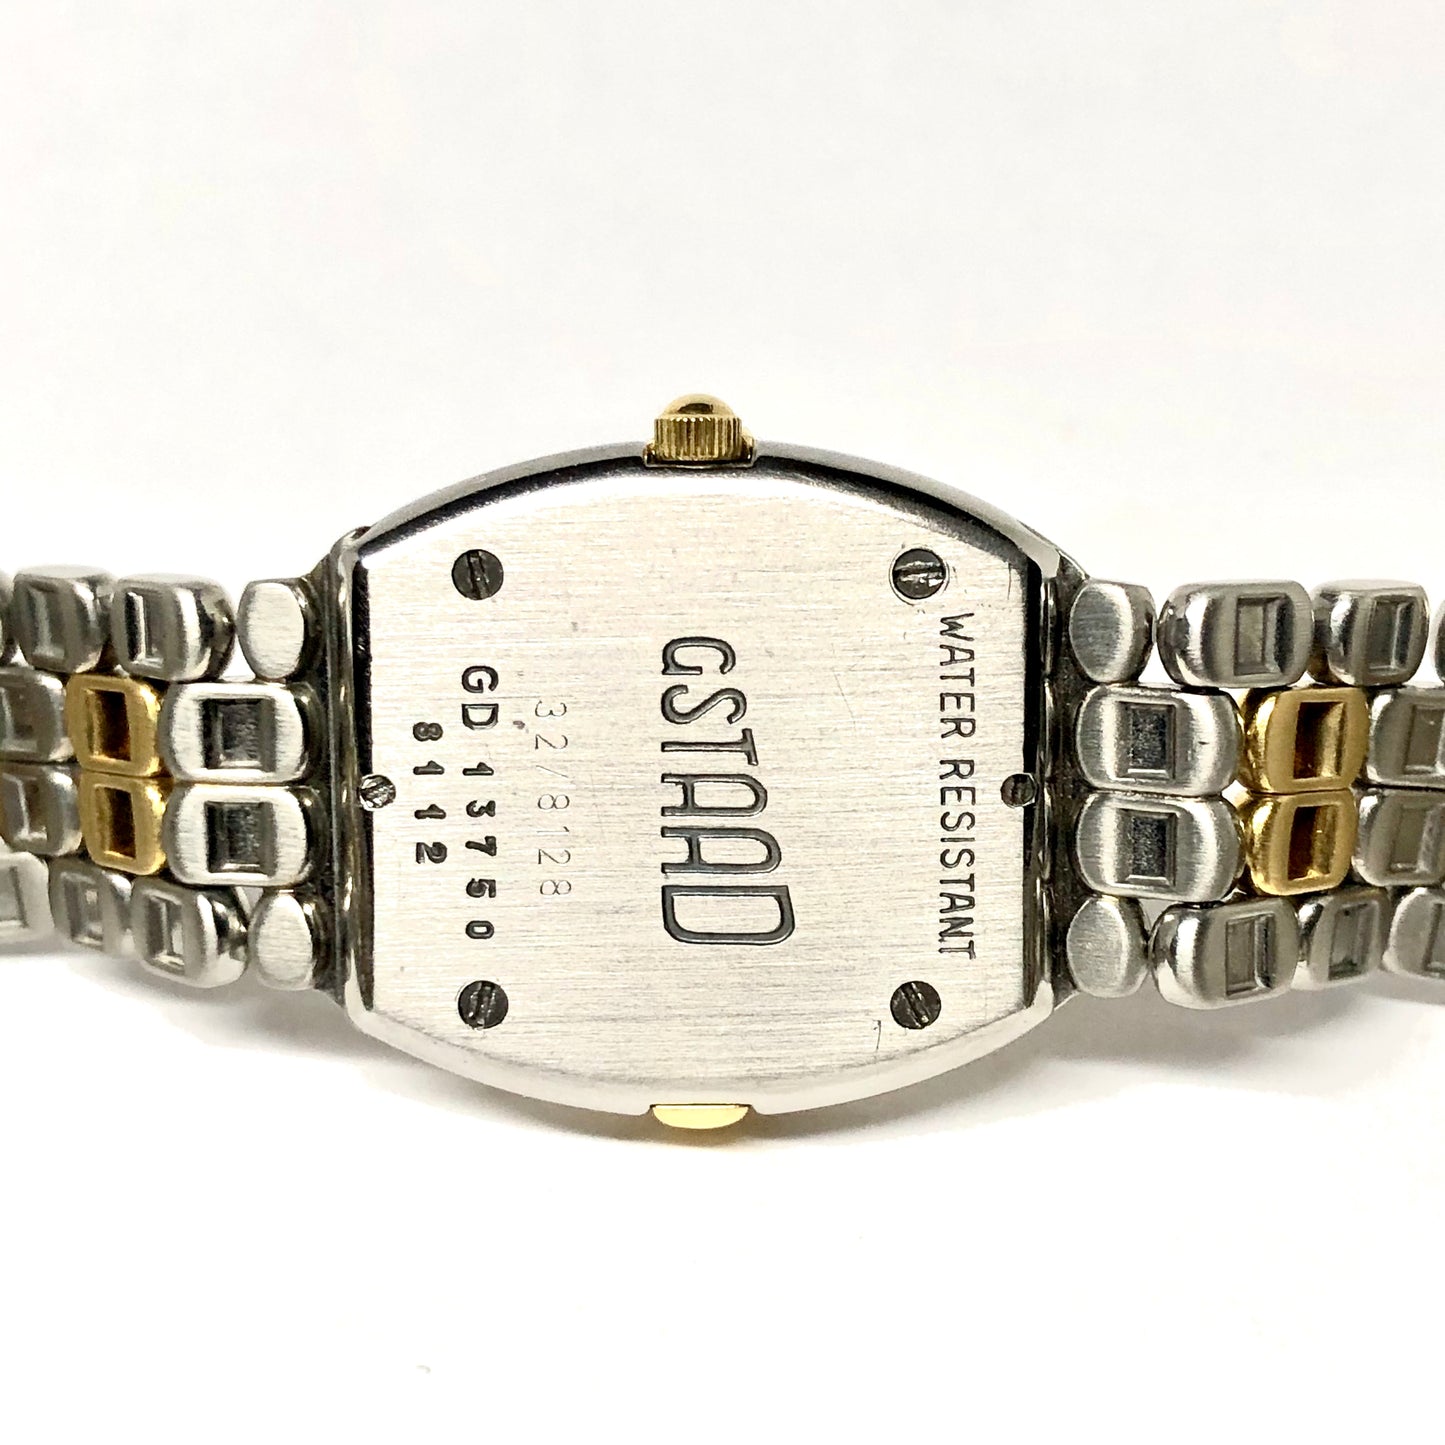 CHOPARD GSTAAD 24mm 2 Tone Diamonds & Rubies Watch